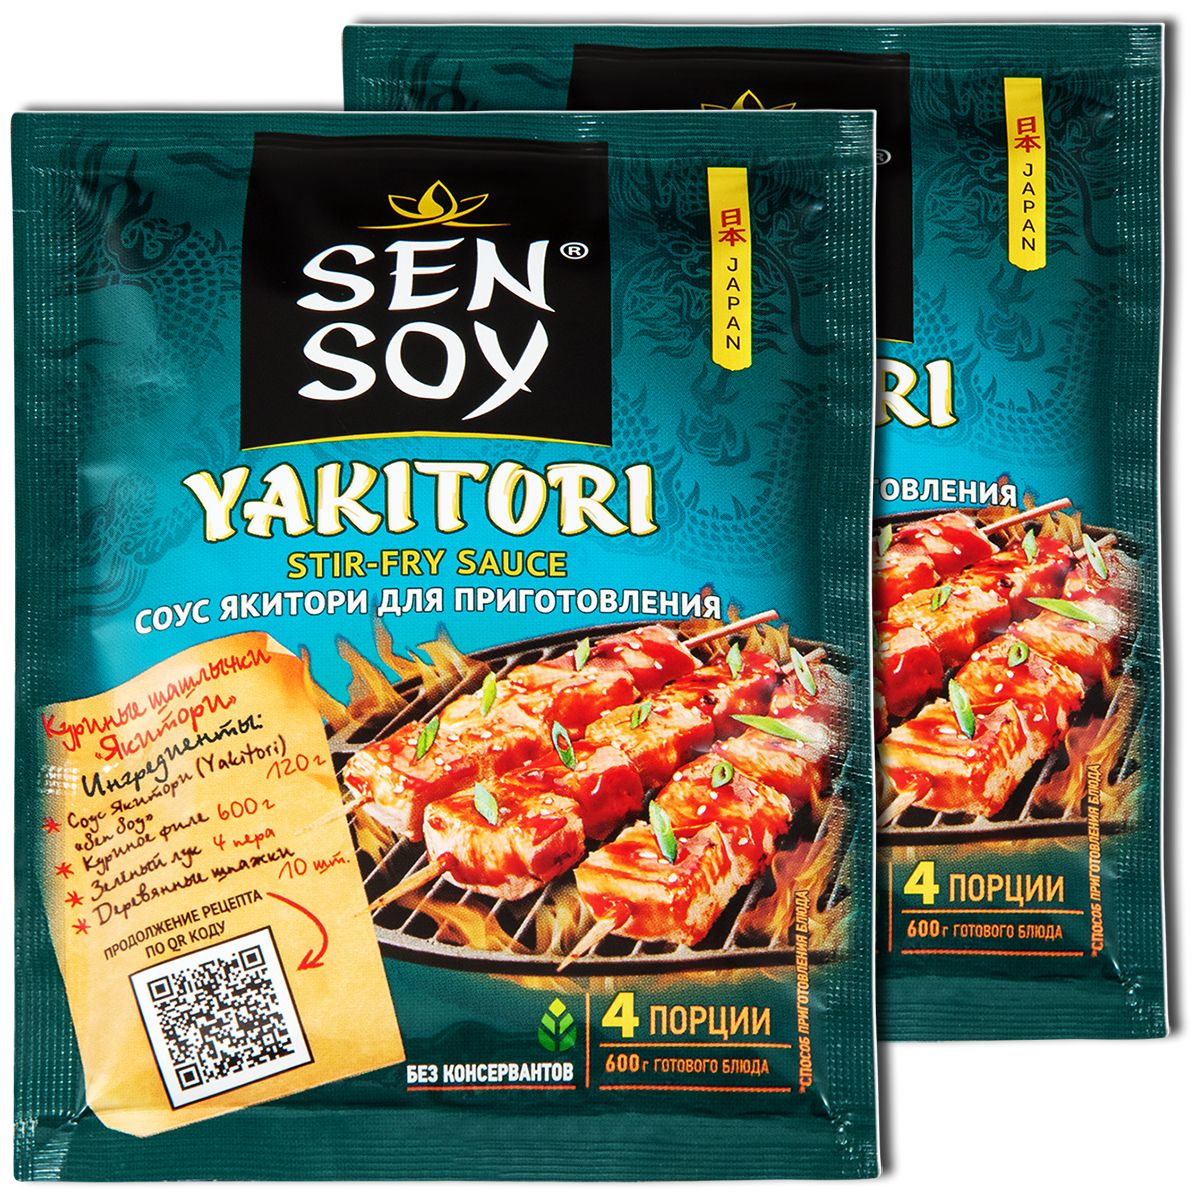 Sen soy набор для суши цена фото 94